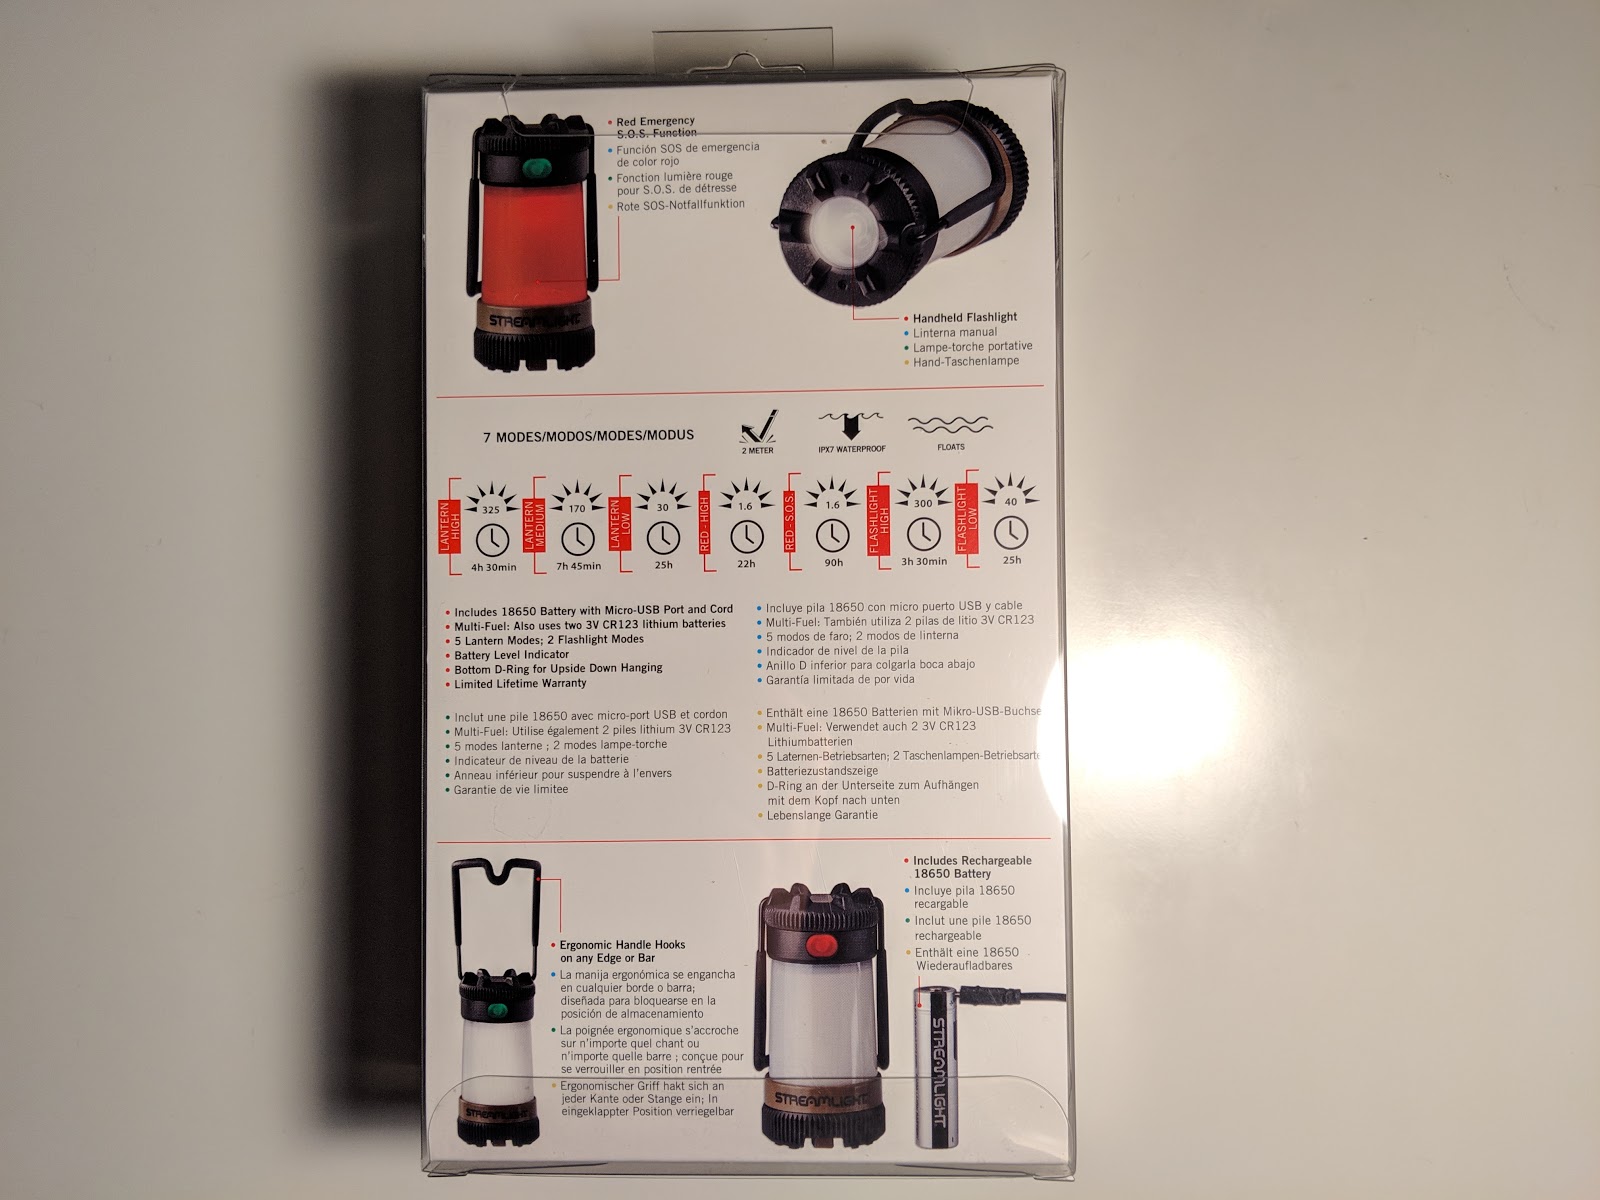 Streamlight Siege X USB Ultra-Compact Multi-Fuel Hand Lantern/F